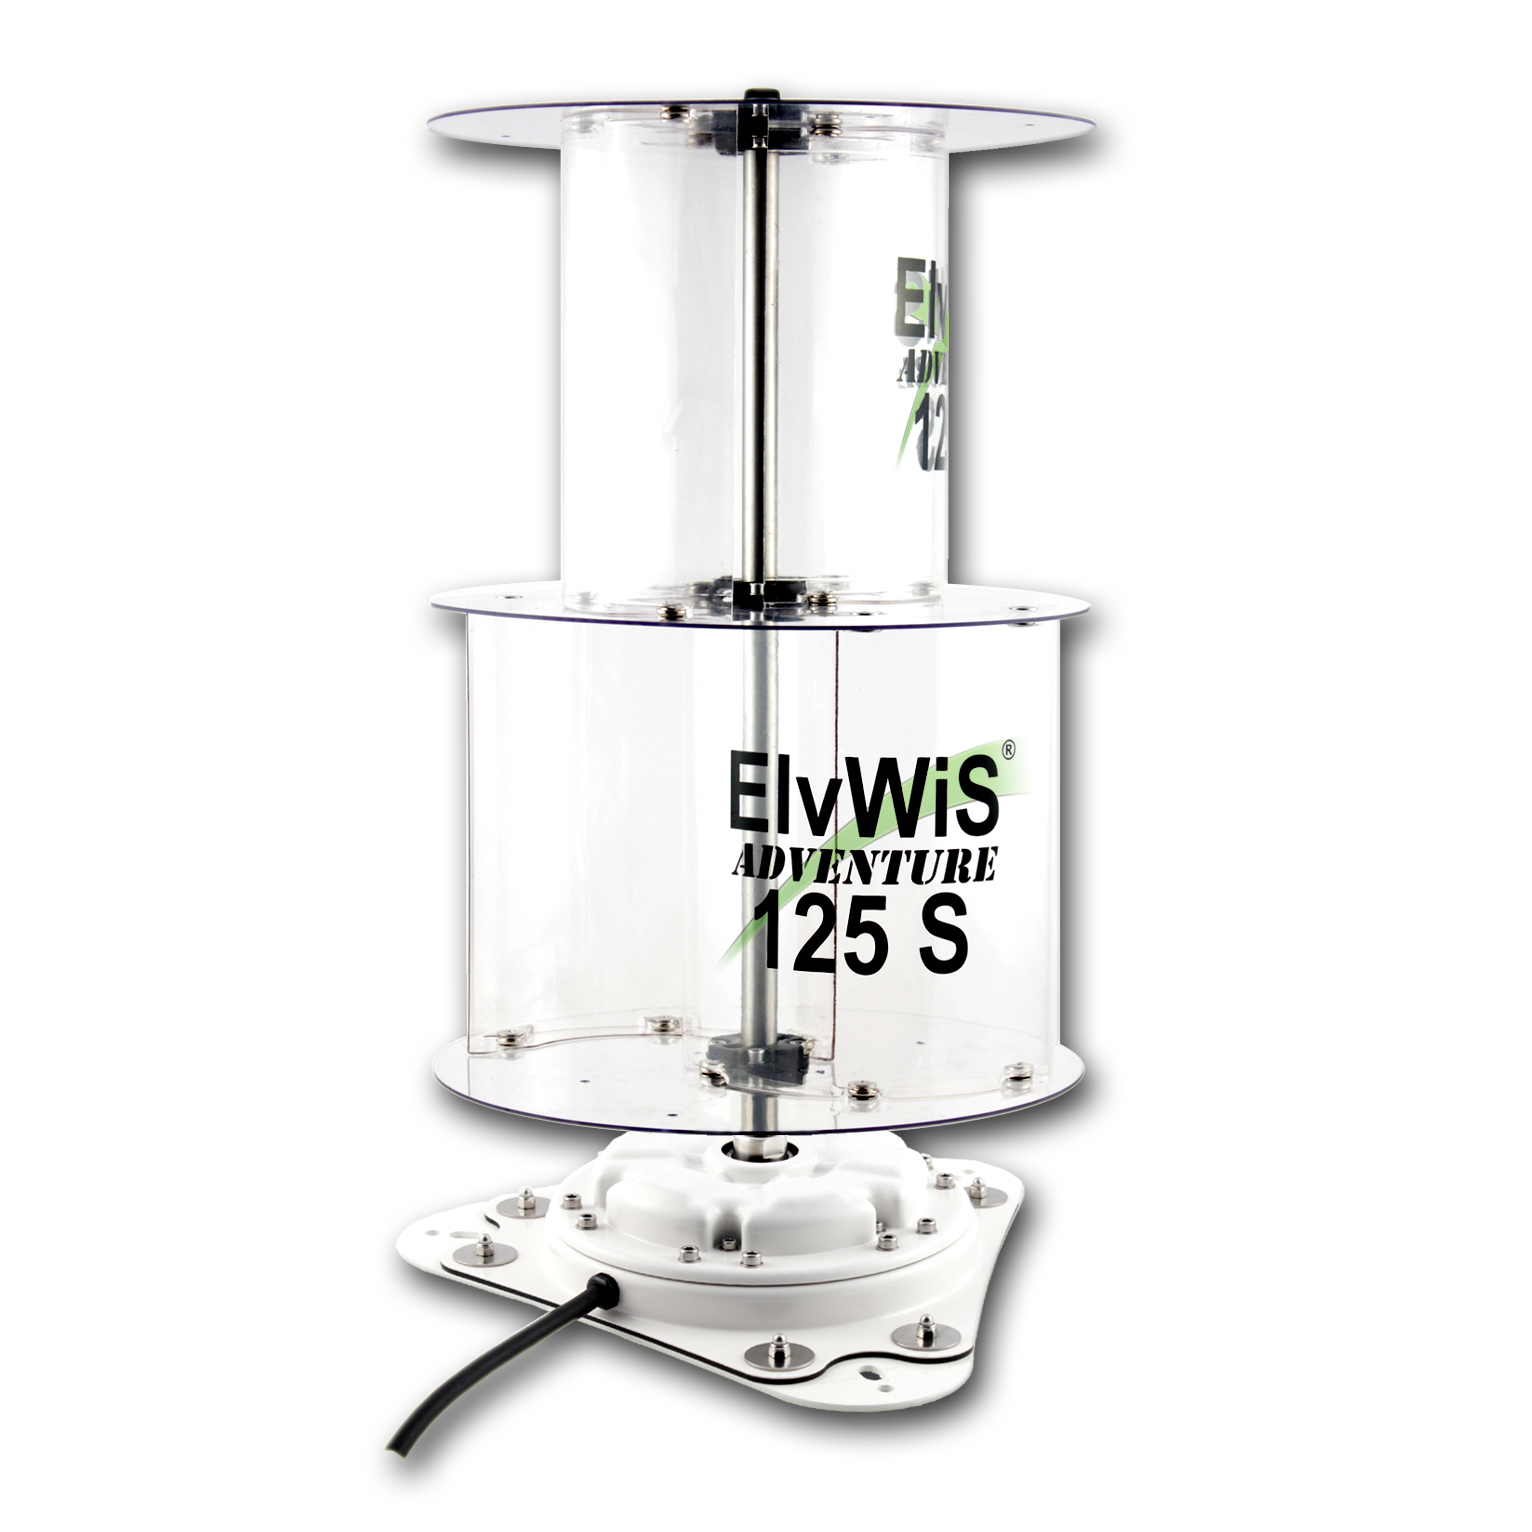 ElvWiS ADVENTURE 125S Stationary Windturbine zerlegbar